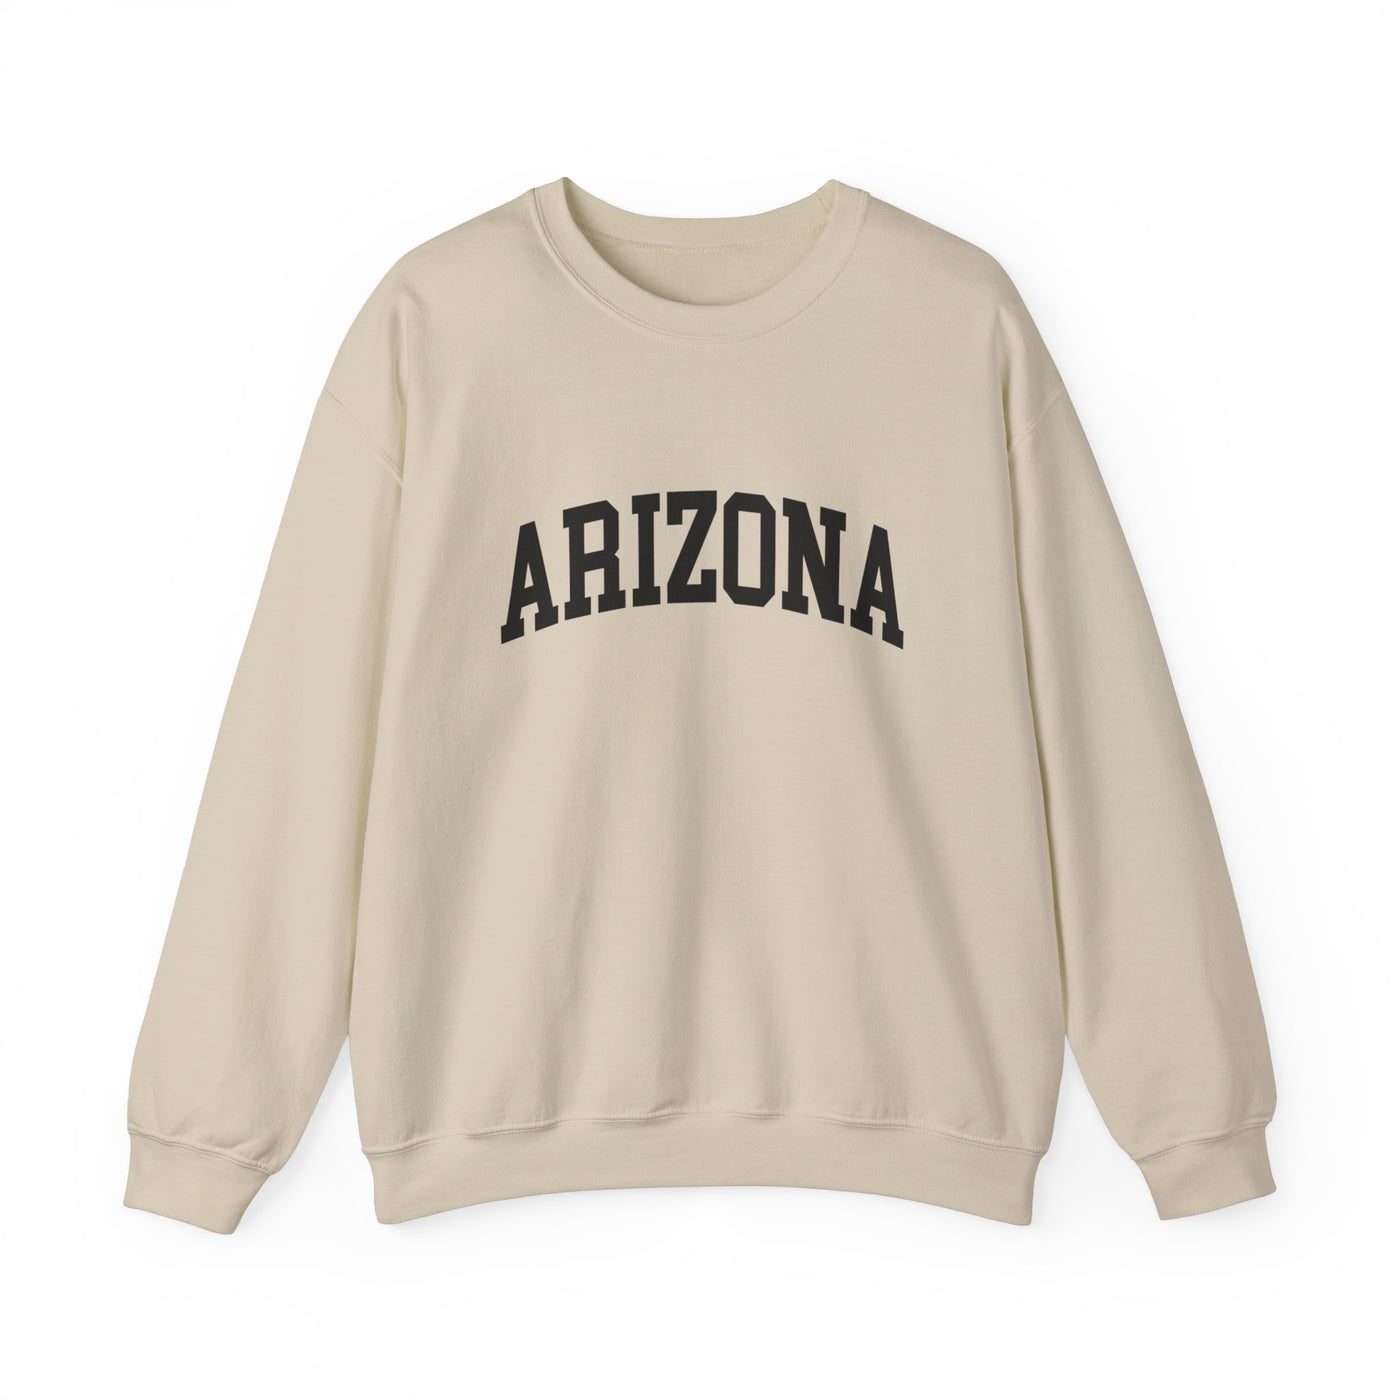 Arizona Collegiate Crewneck Sweatshirt